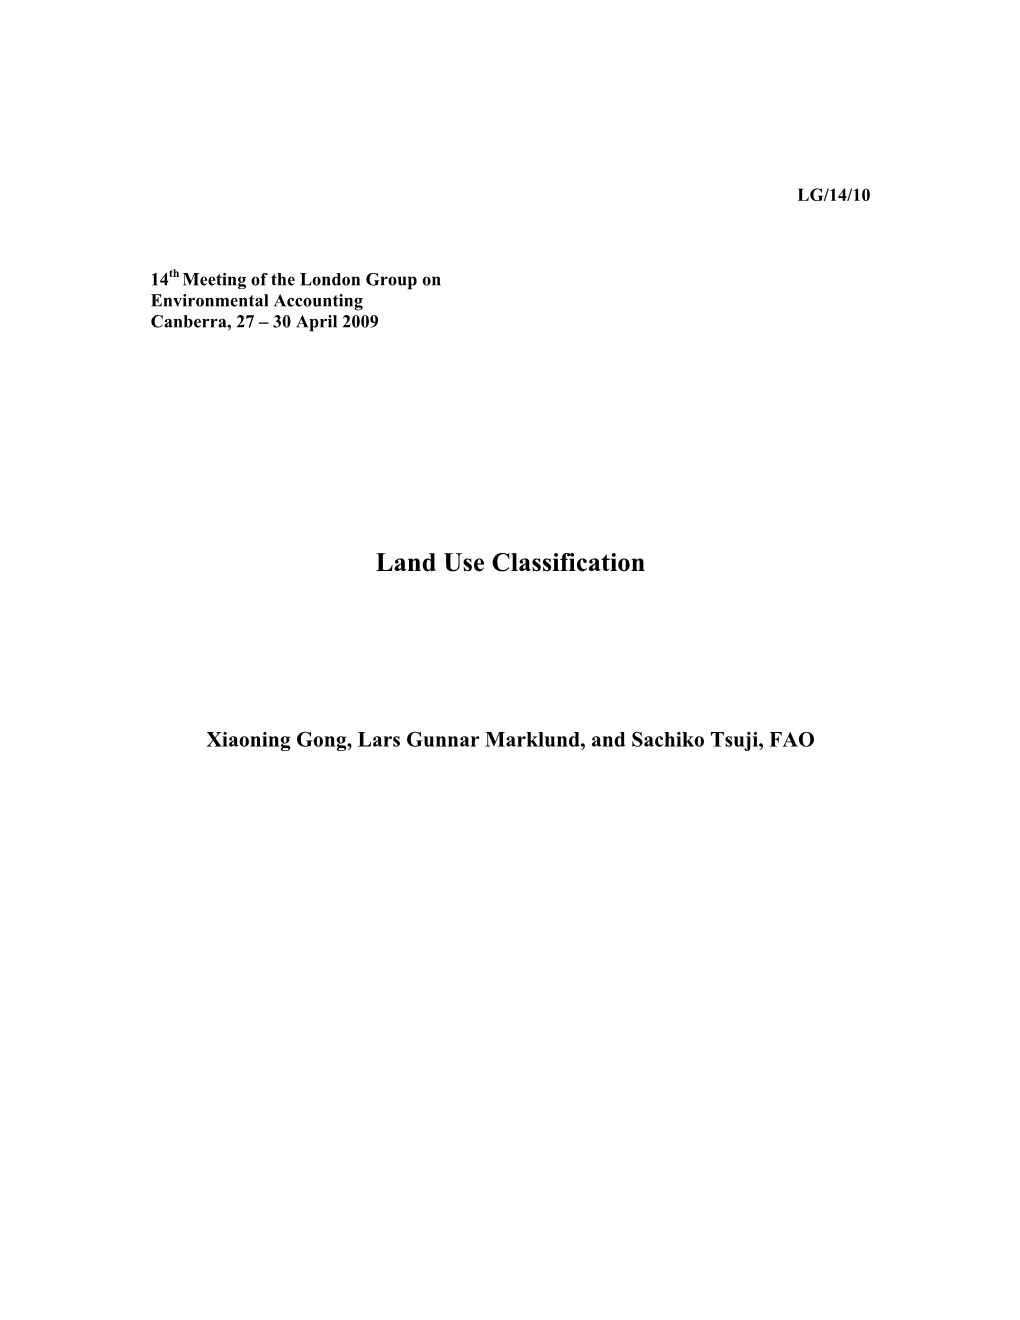 Land Use Classification